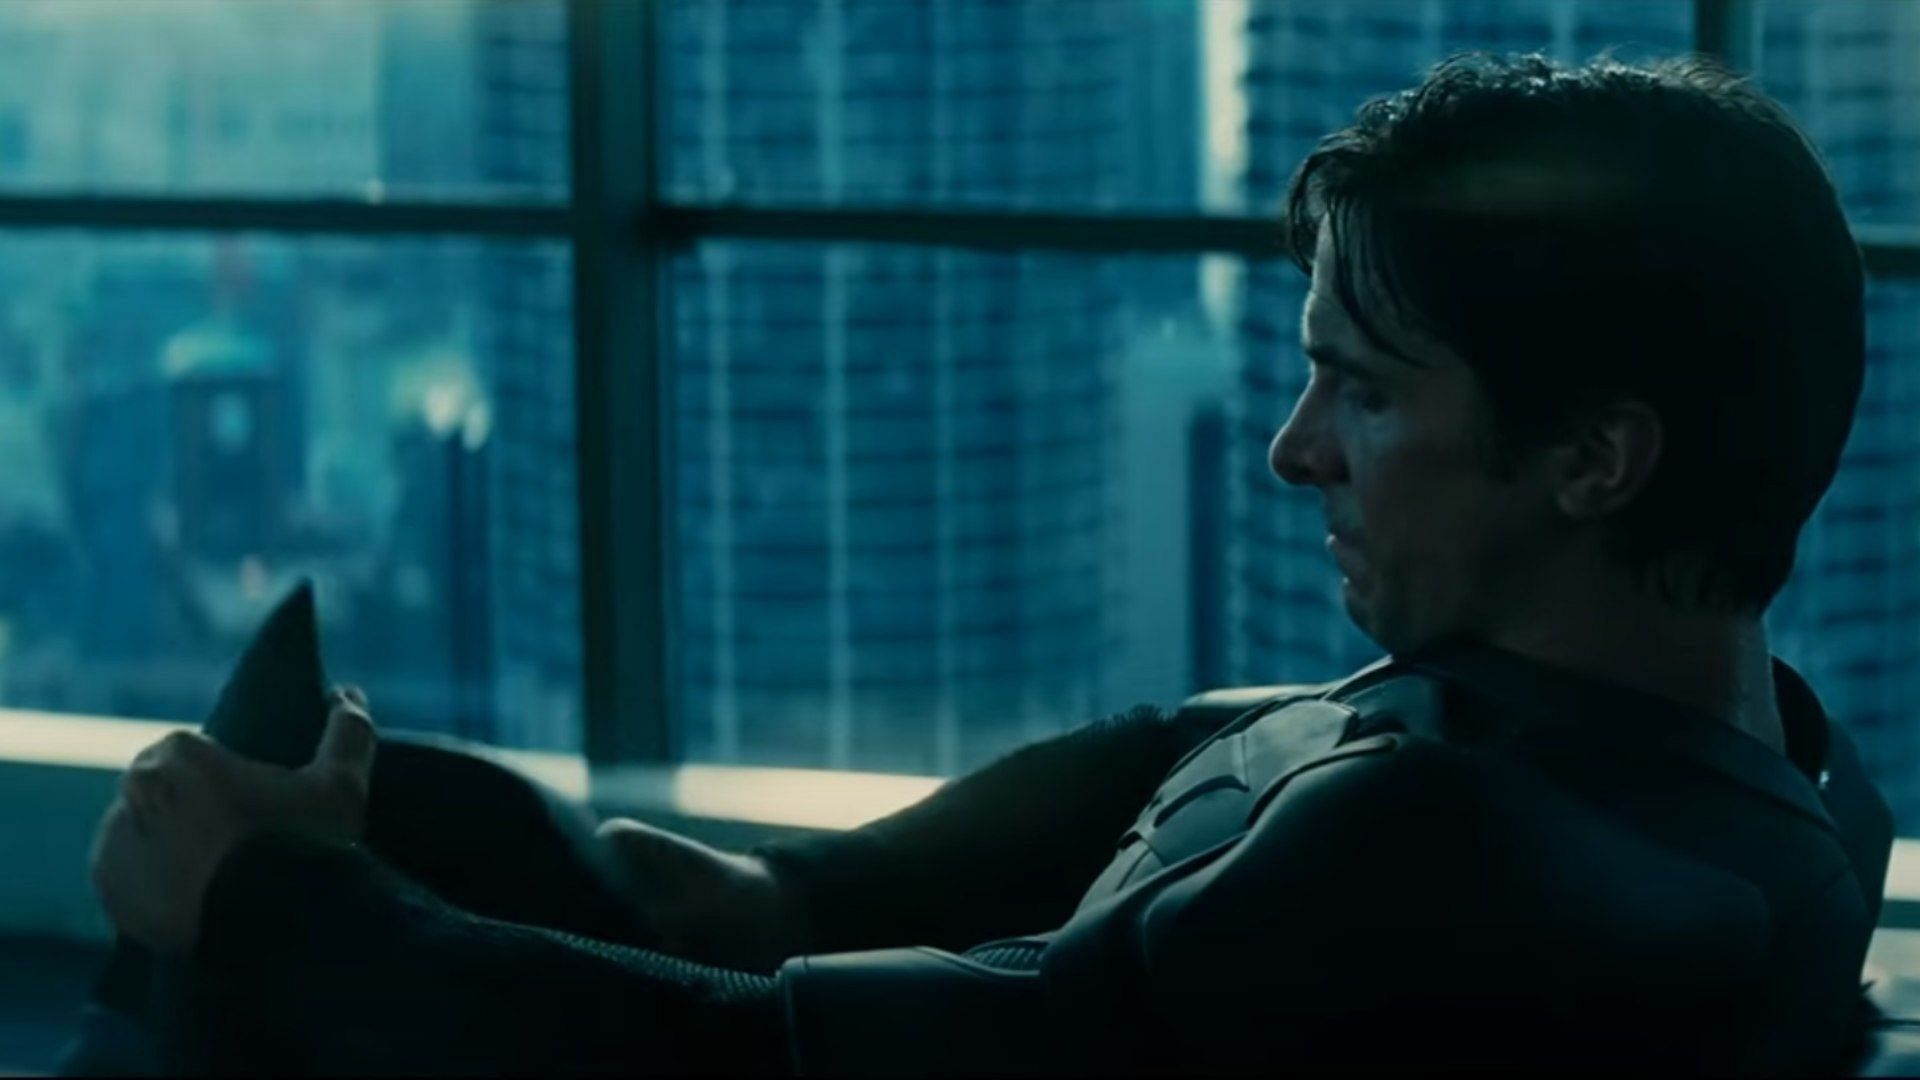 Christian Bale seen in The Dark Knight (Image via DC, The Dark Knight trailer, 01:29)